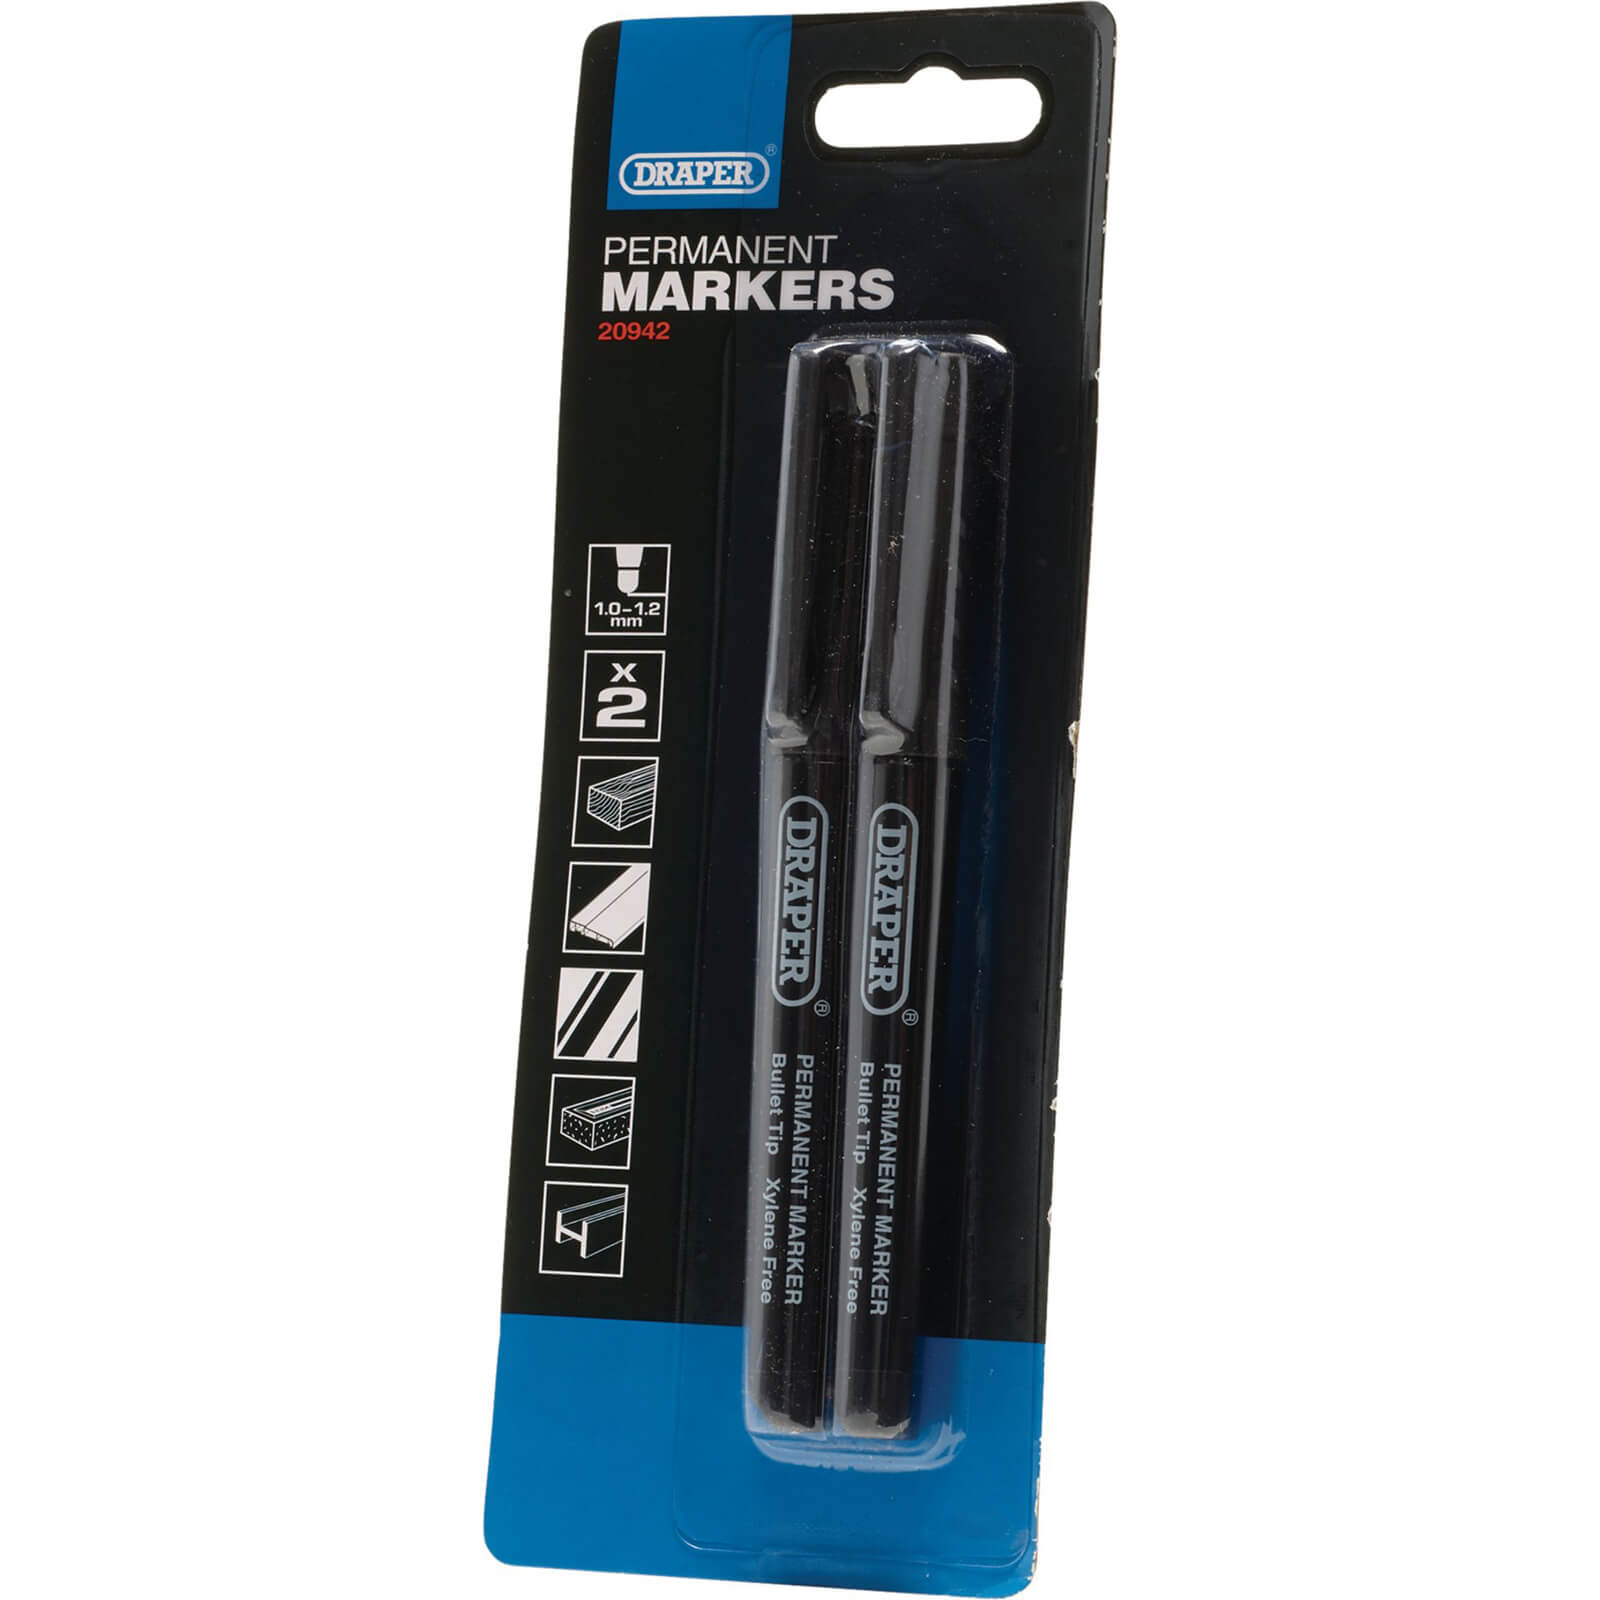 Photos - Felt Tip Pen Draper Permanent Marker Pen Black Pack of 2 20942 